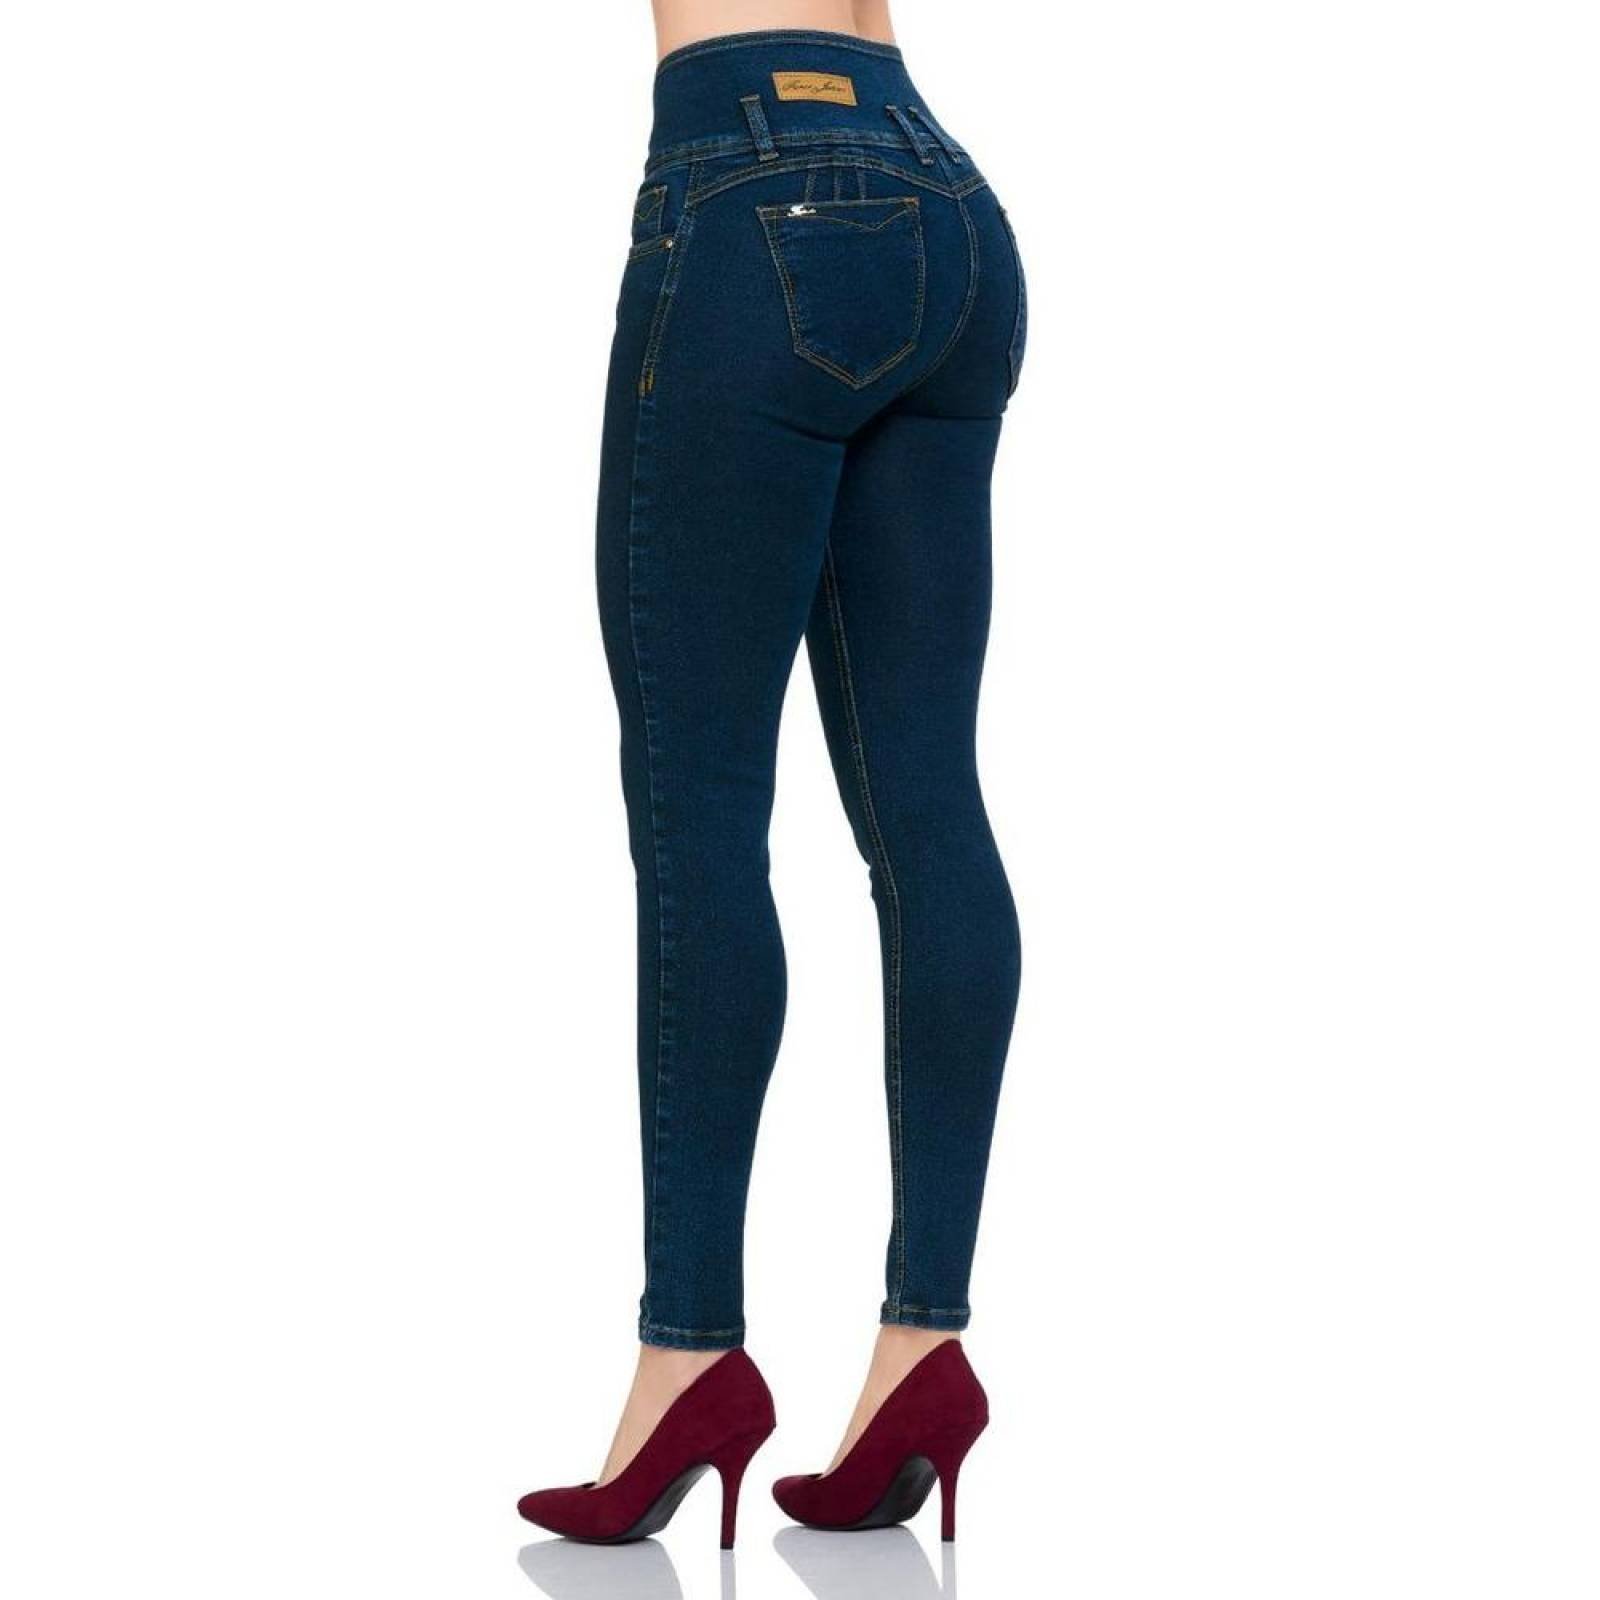 Jeans Básico Mujer Furor Stone 62105008 Mezclilla Stretch 